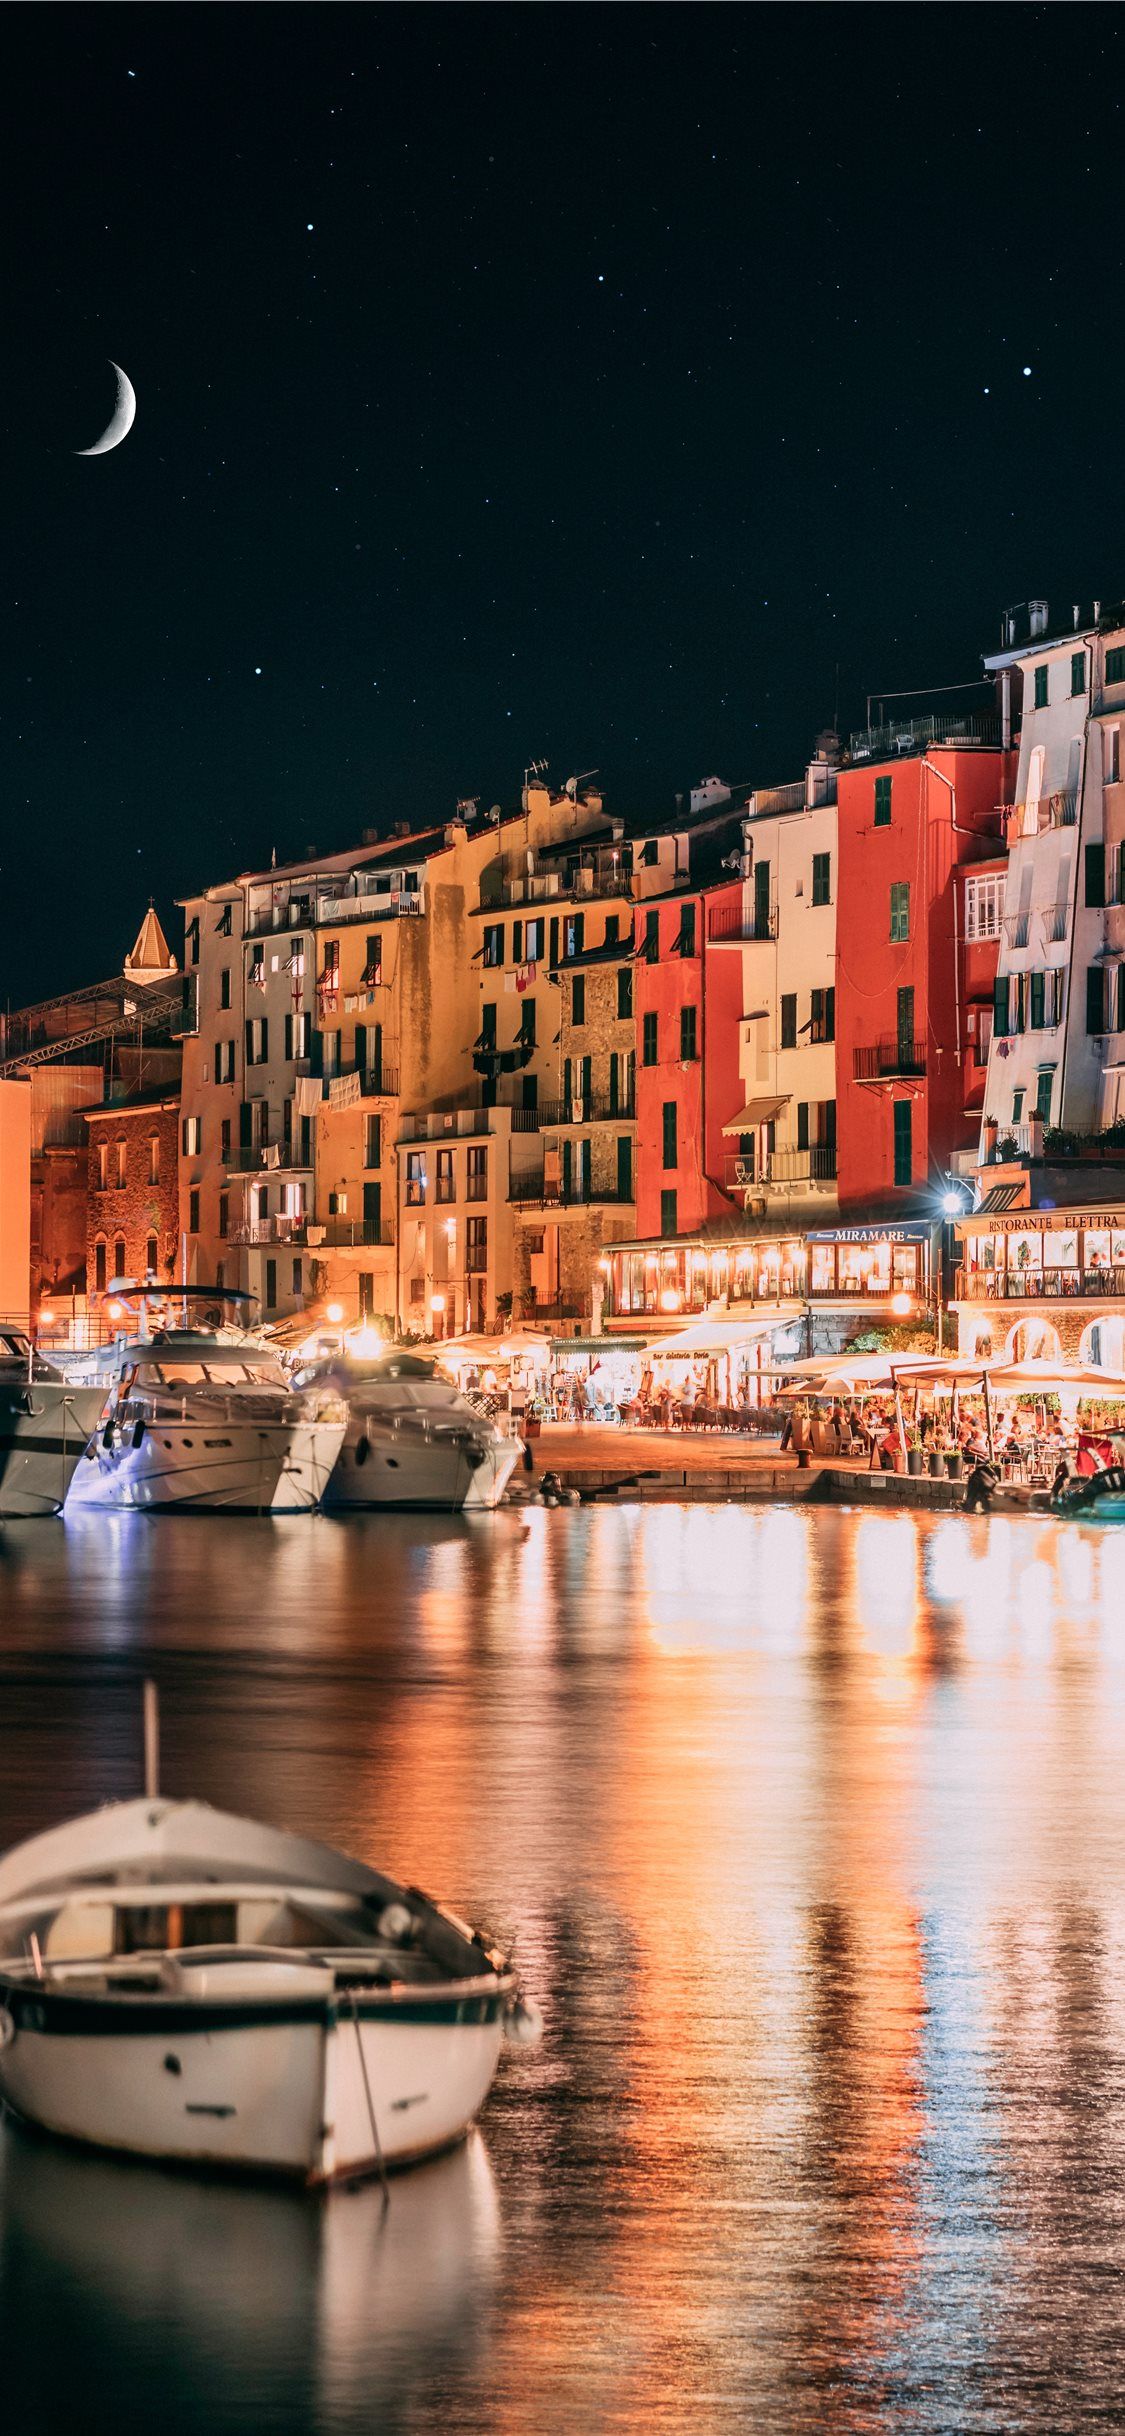 Italian riviera by night iPhone X Wallpaper Free Download